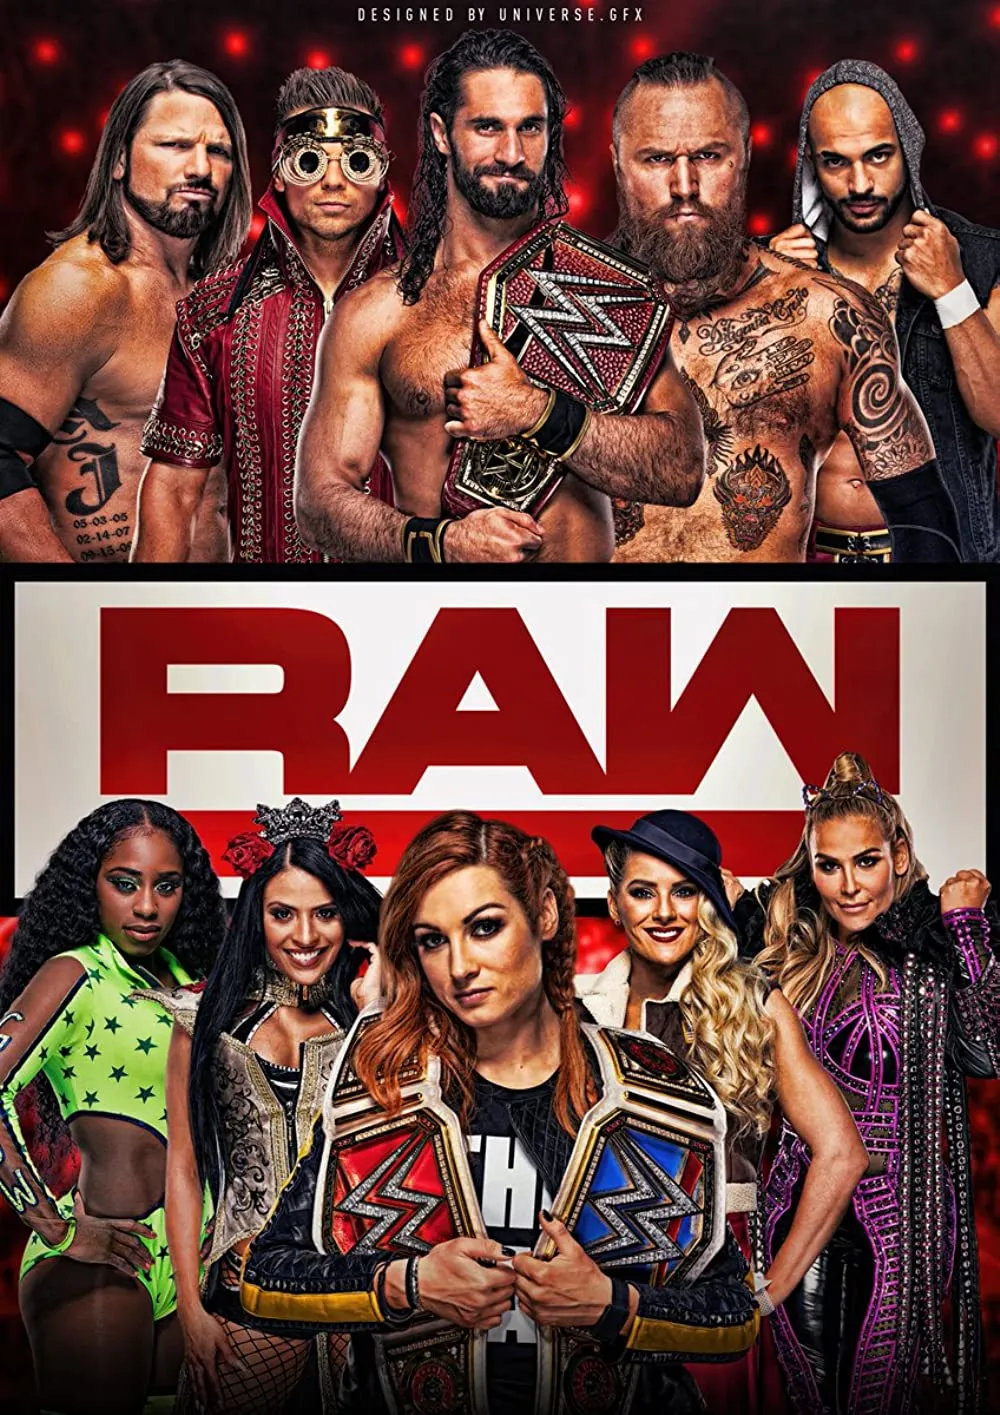 WWE Monday Night Raw (25 December 2023) English 720p HDTV 1.2GB | 500MB Download